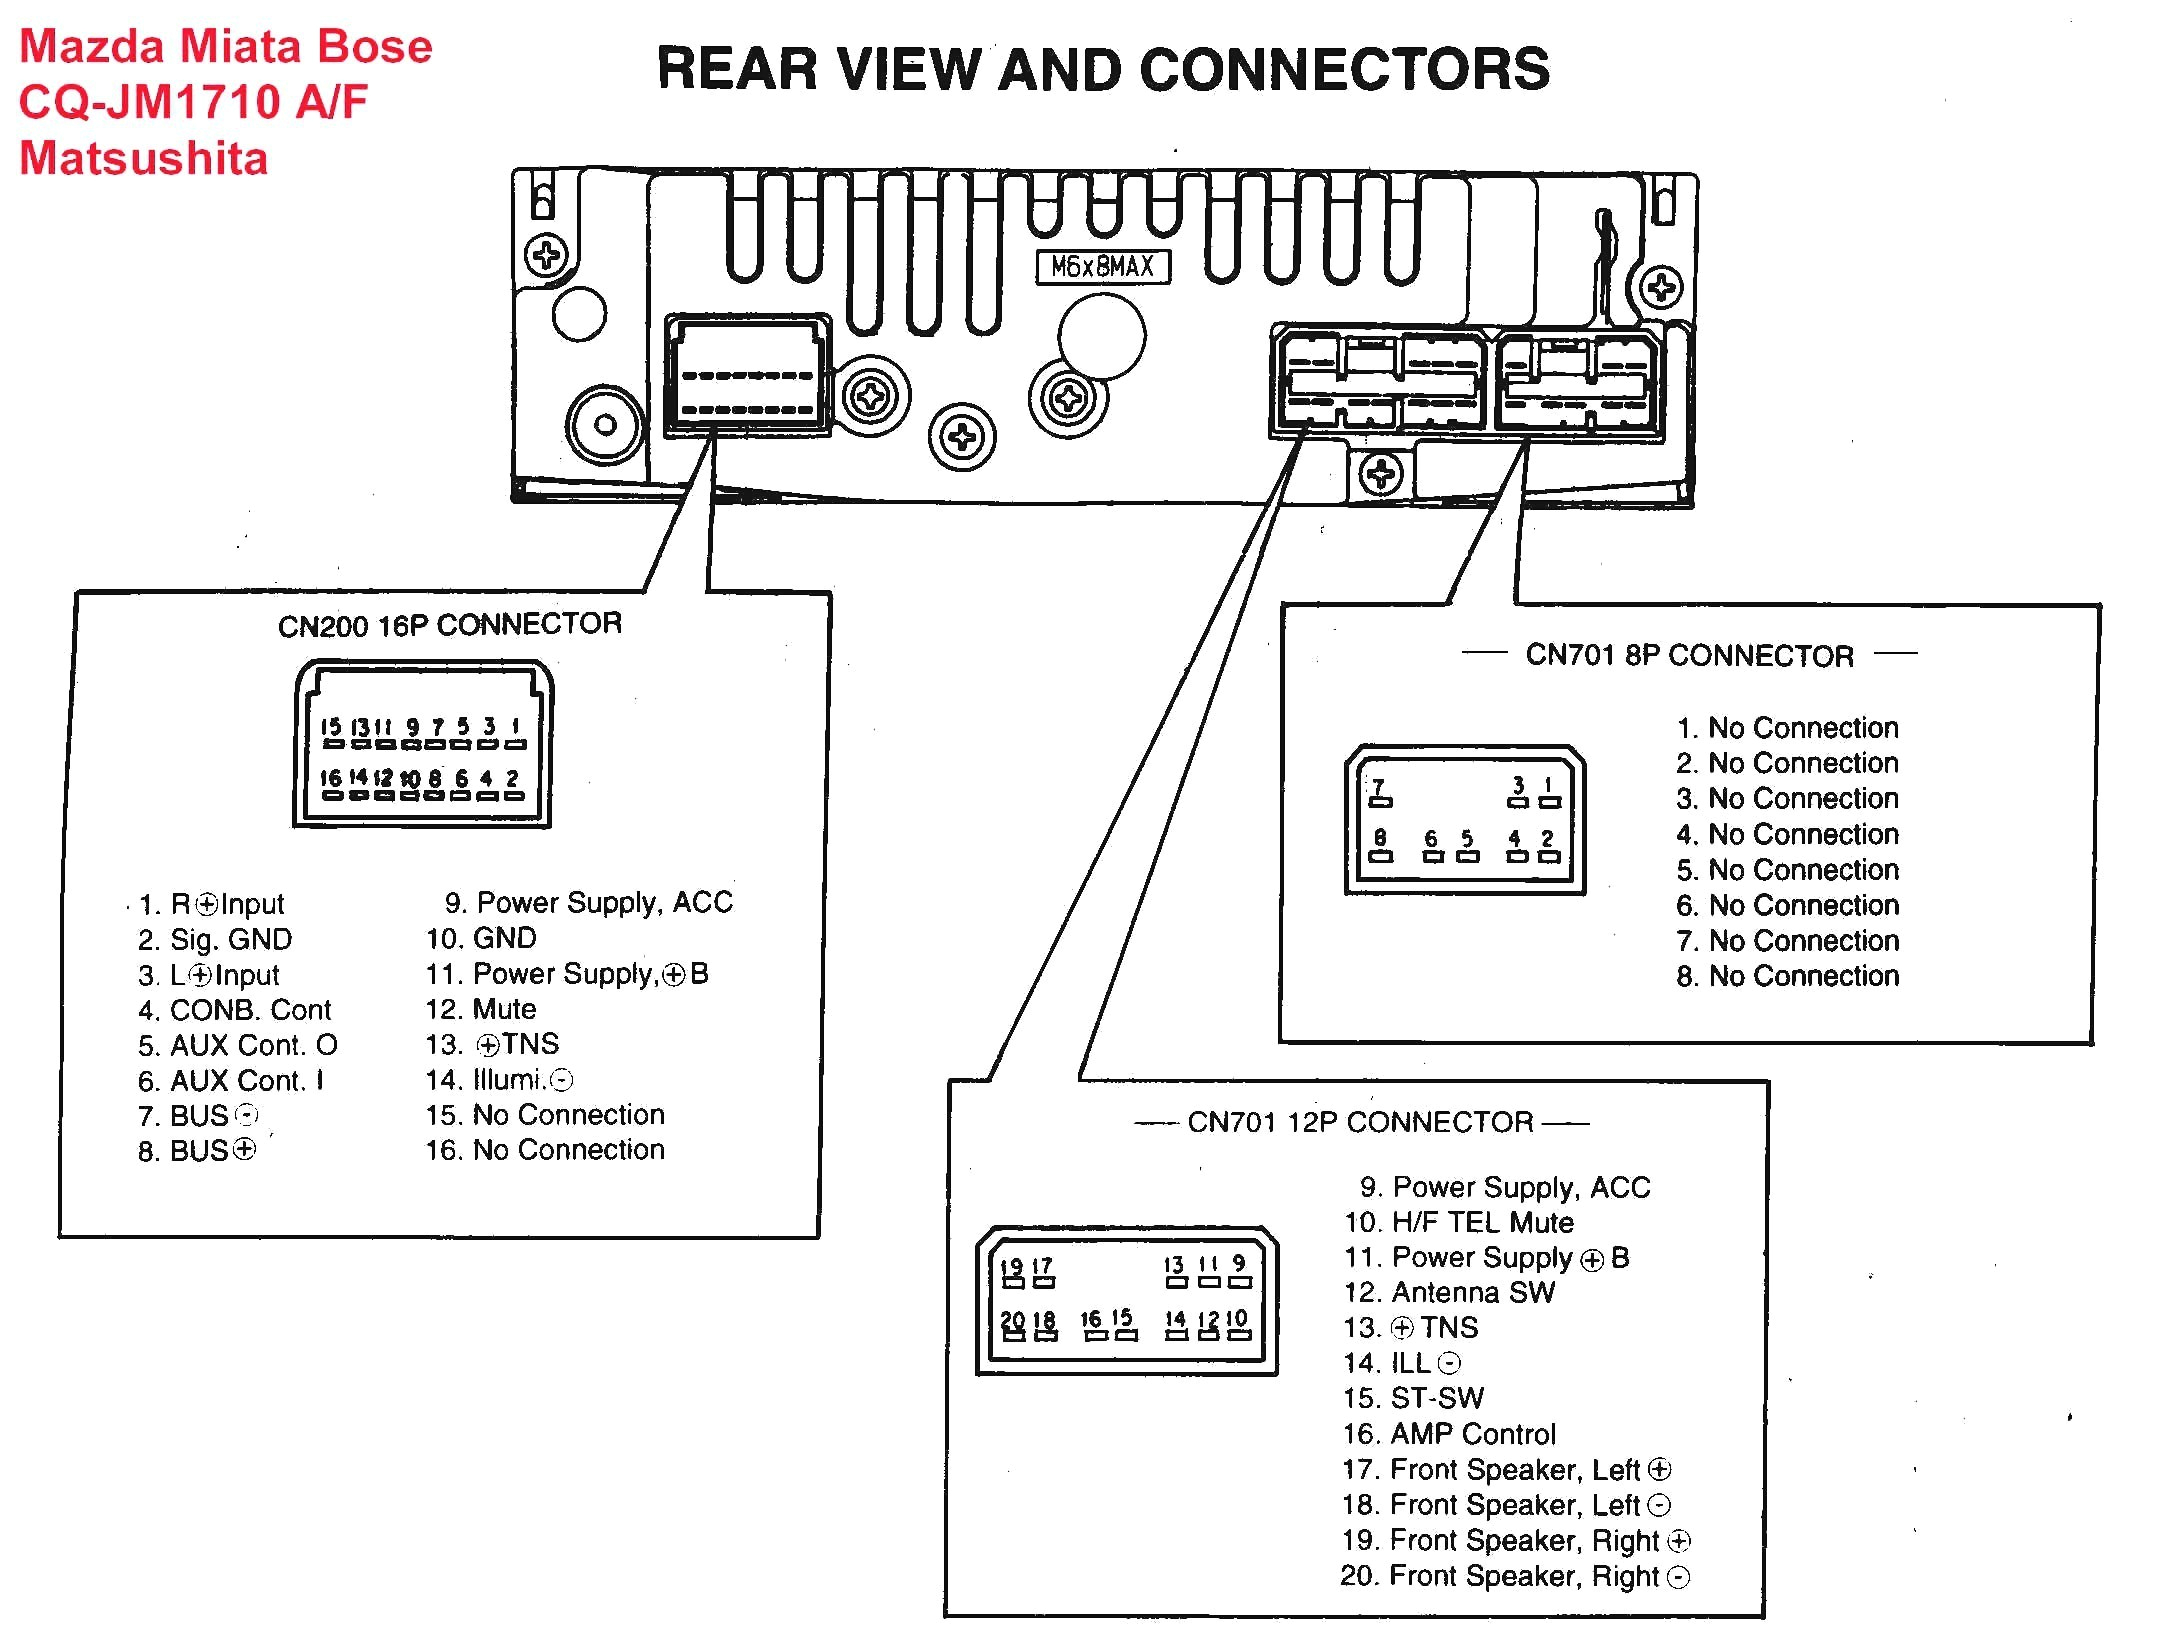 deh p3900mp wiring diagram